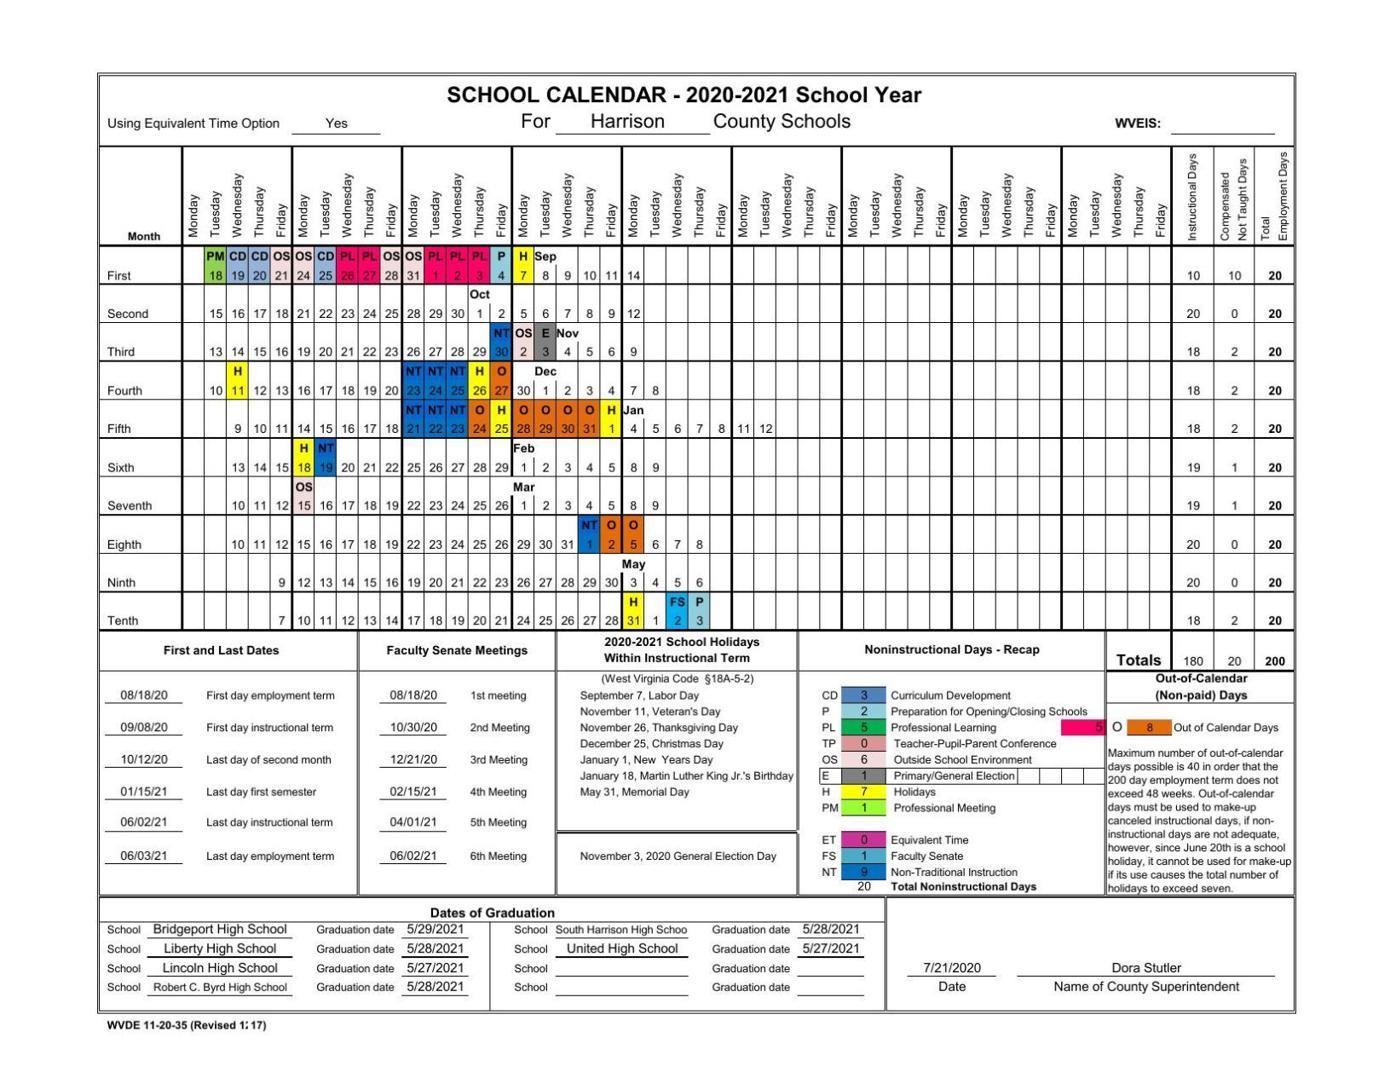 kanawha-county-schools-calendar-2022-may-2022-calendar